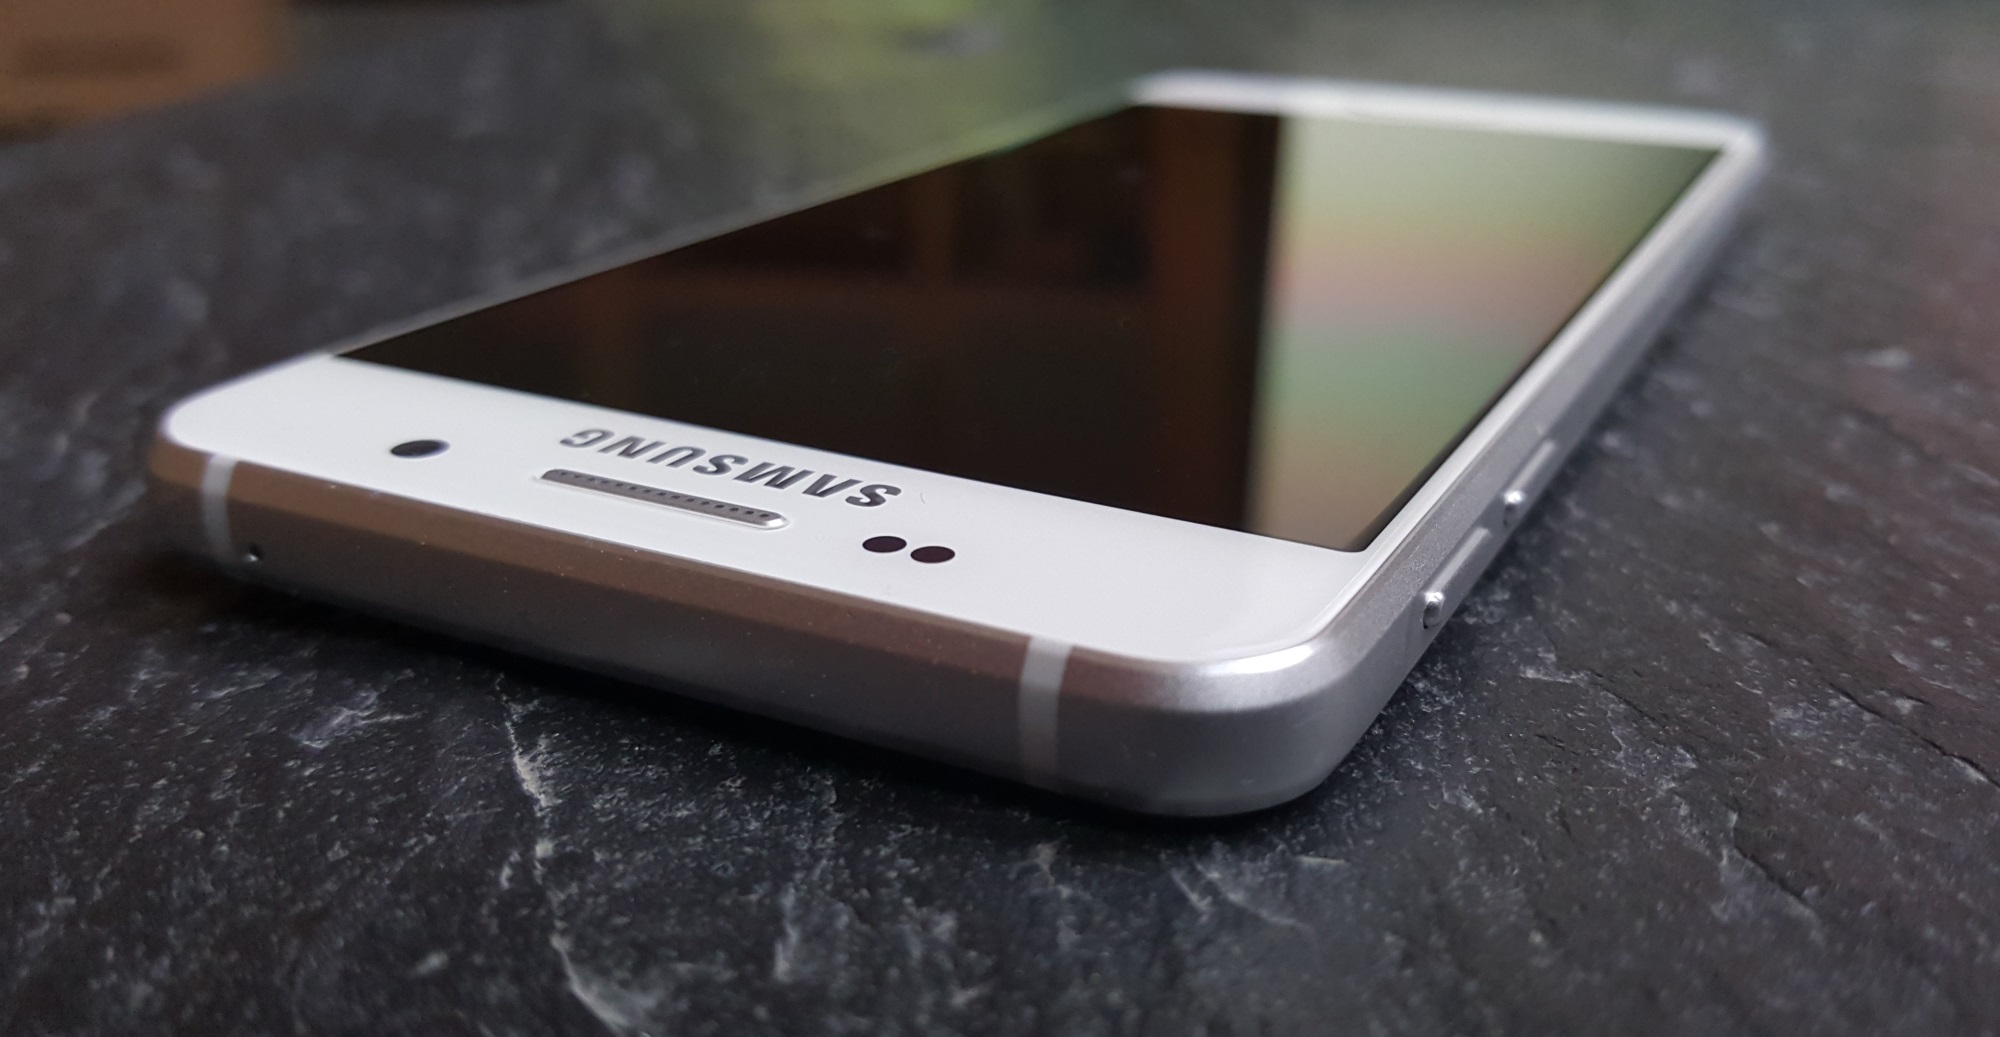 Samsung A3 (2015) and Galaxy A5 (2016) preview - SamMobile - SamMobile